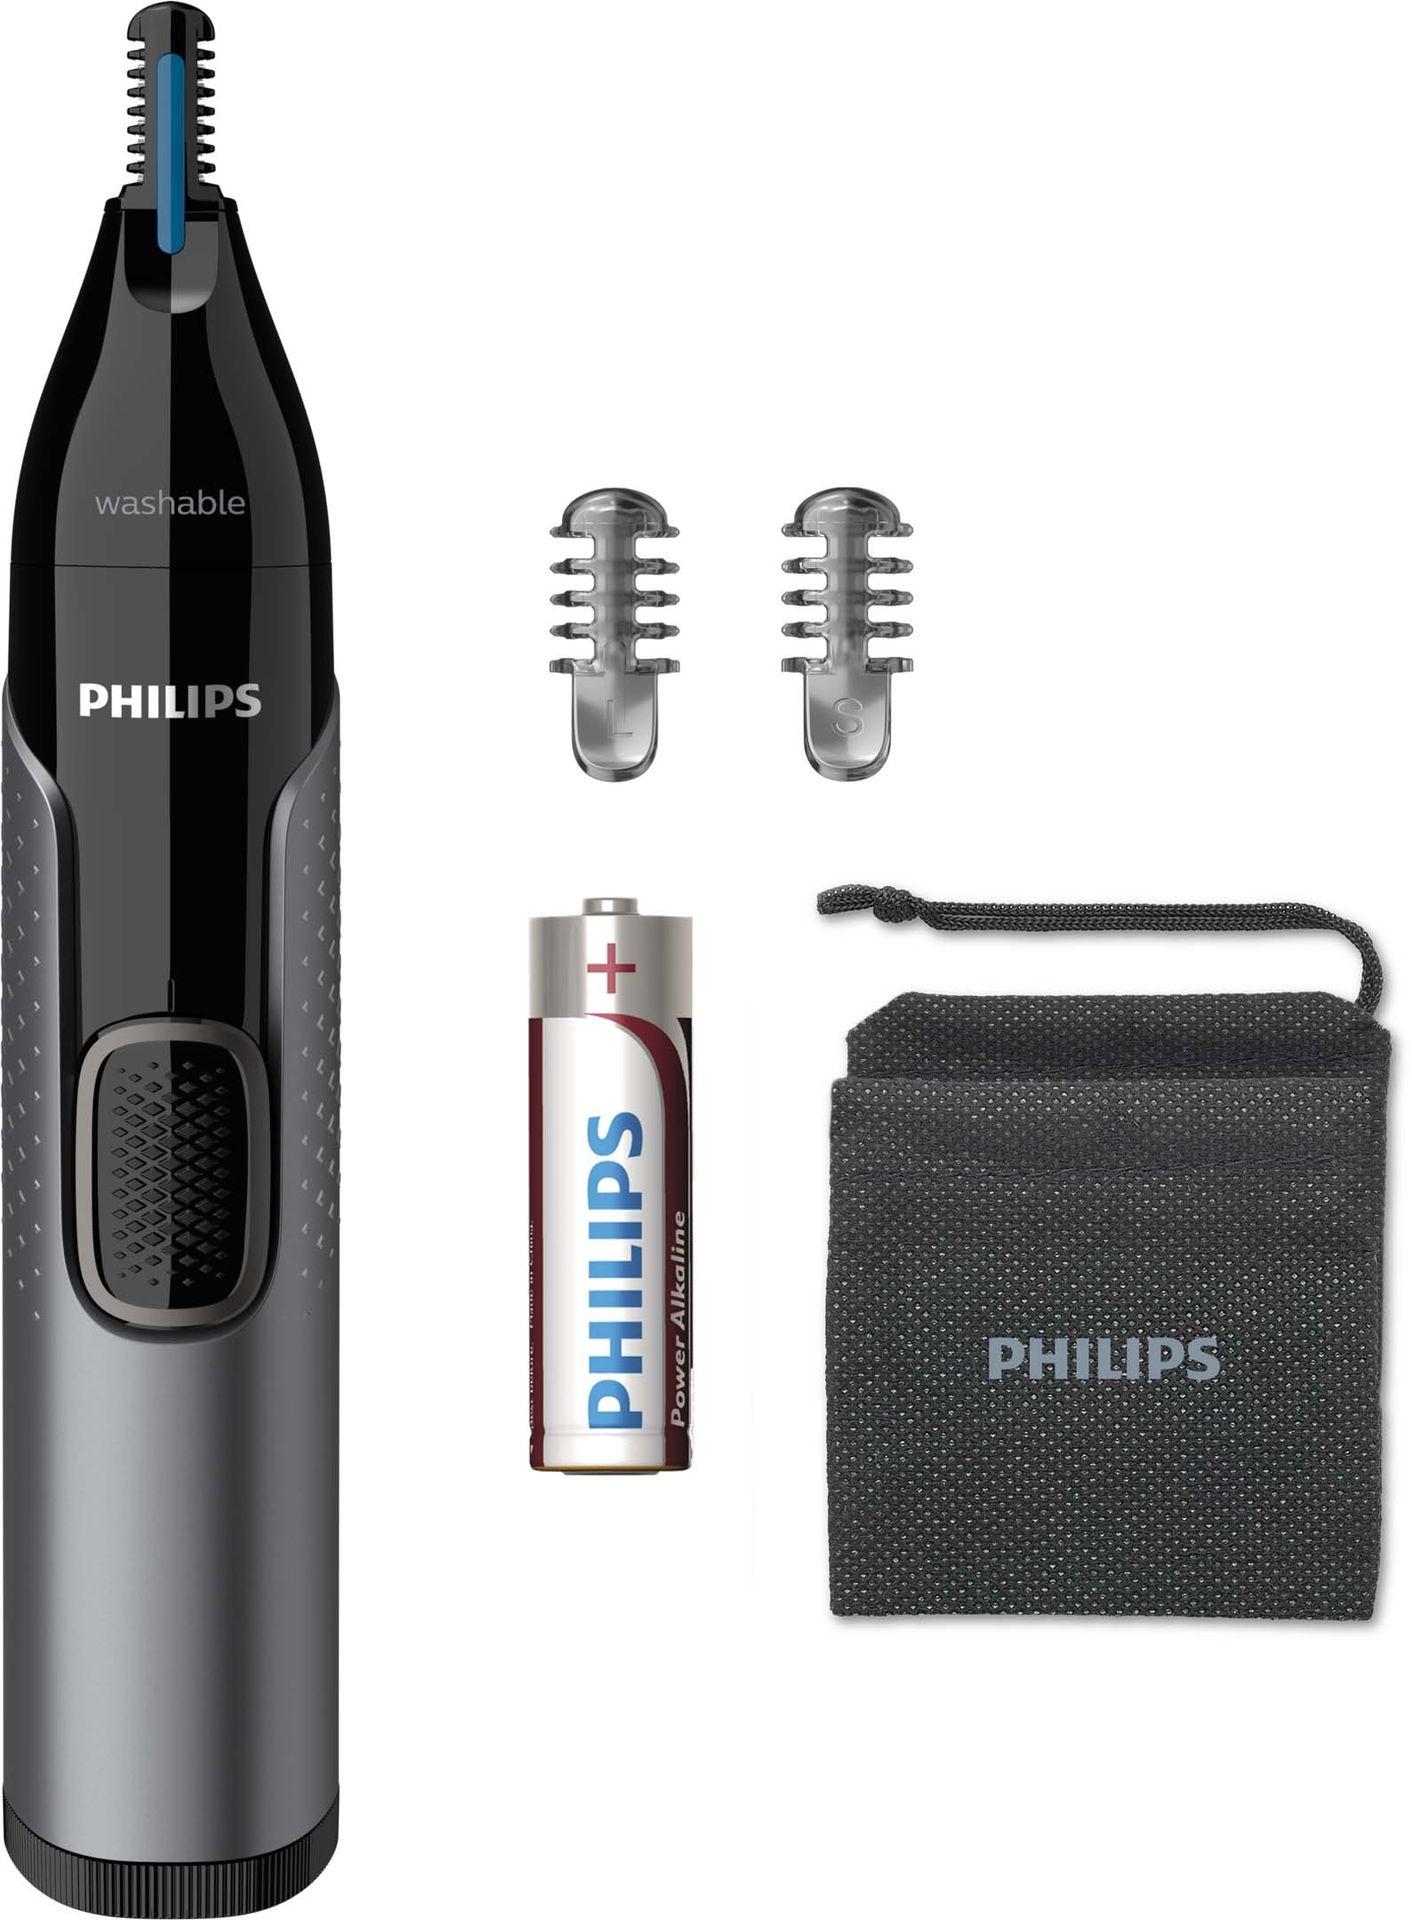 Philips Hygientrimmer NT3650 - Trymer do nosa, uszu i brwi